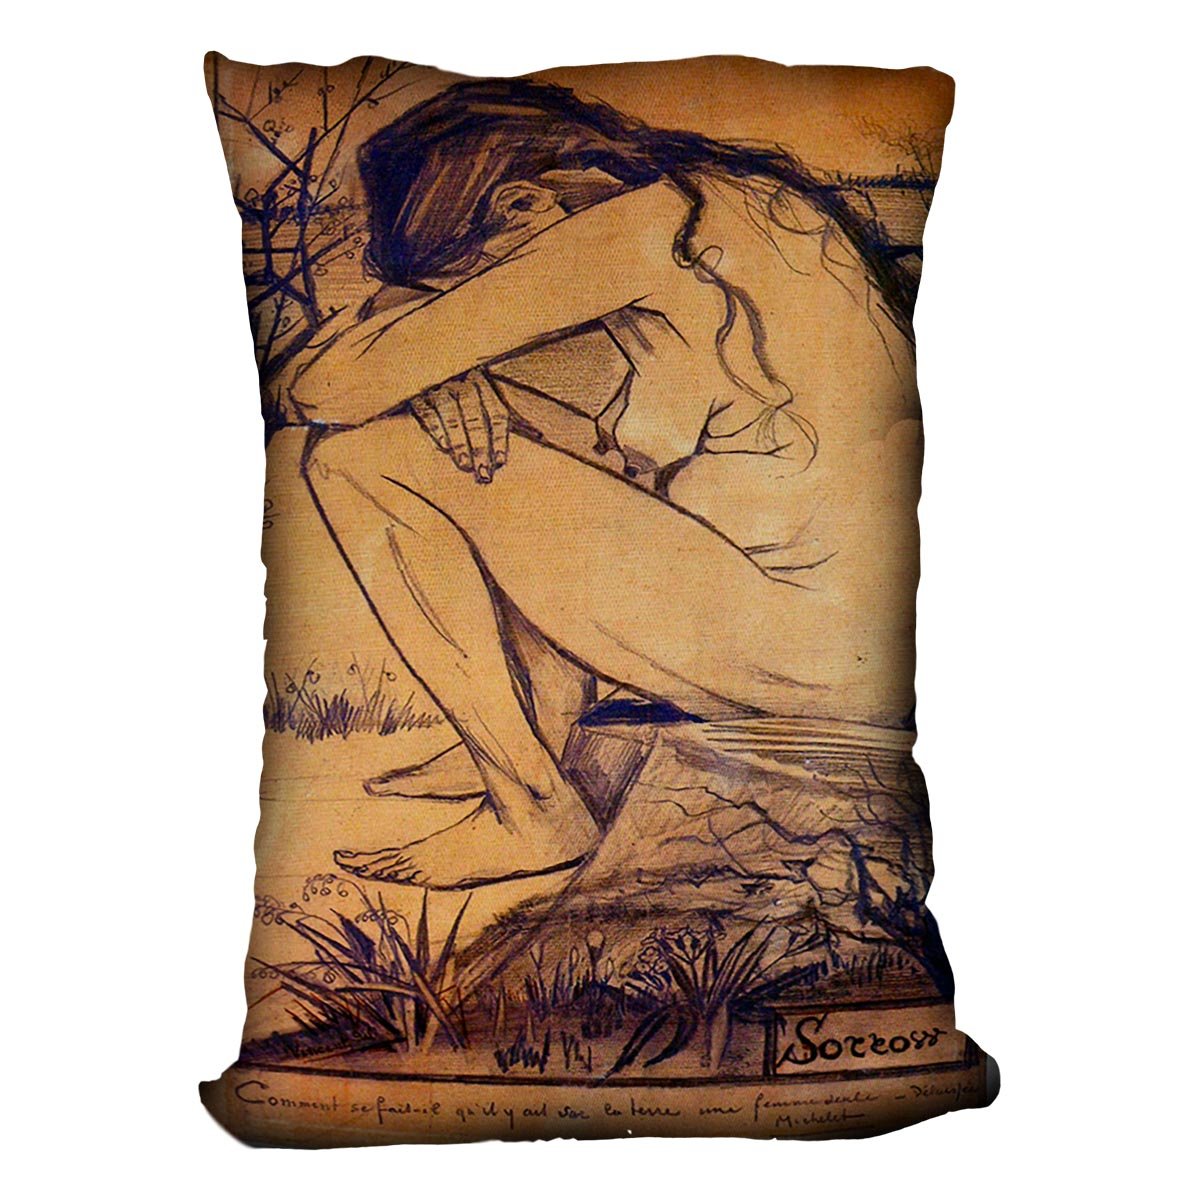 Sorrow by Van Gogh Throw Pillow